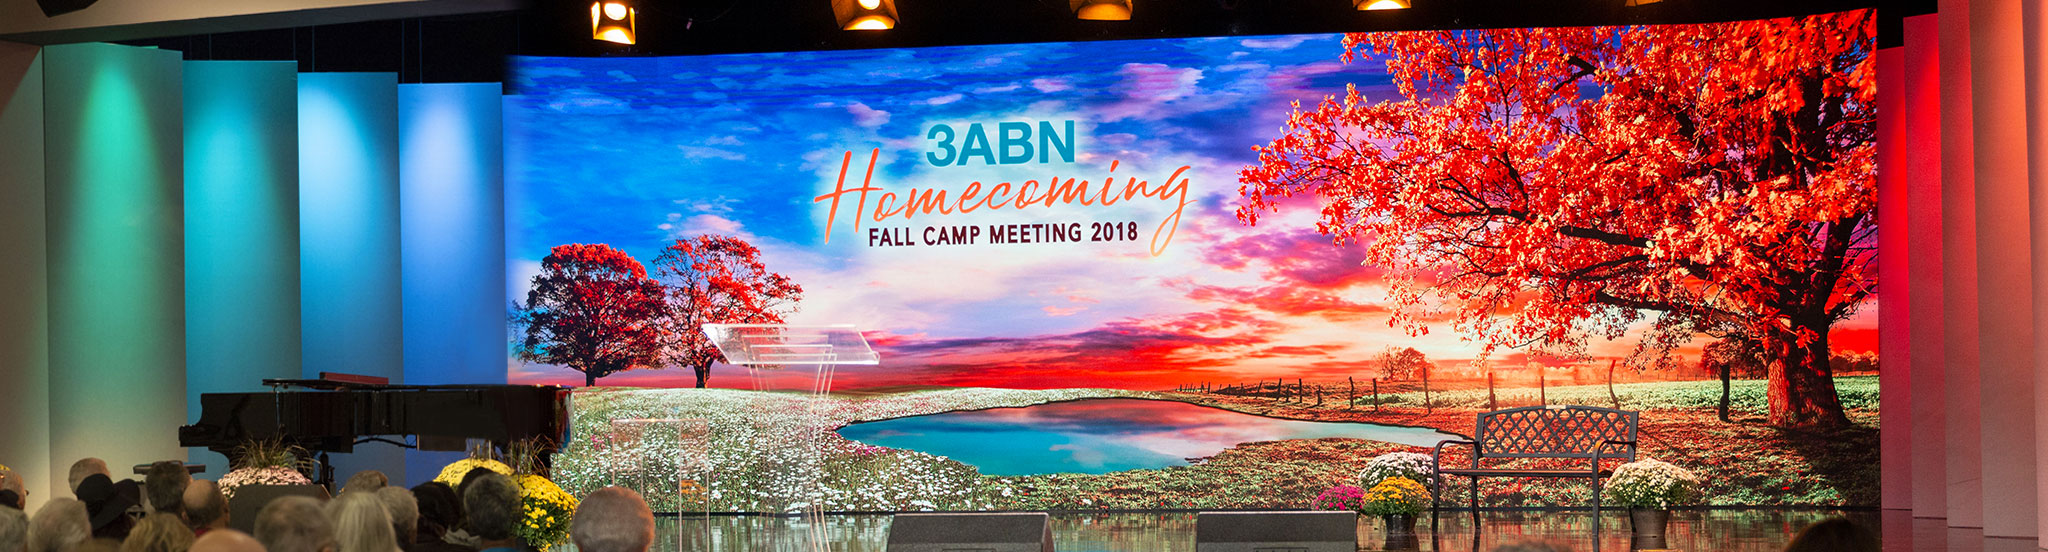 3ABN Fall Camp MeetingSeptember 2729, 2018 Home